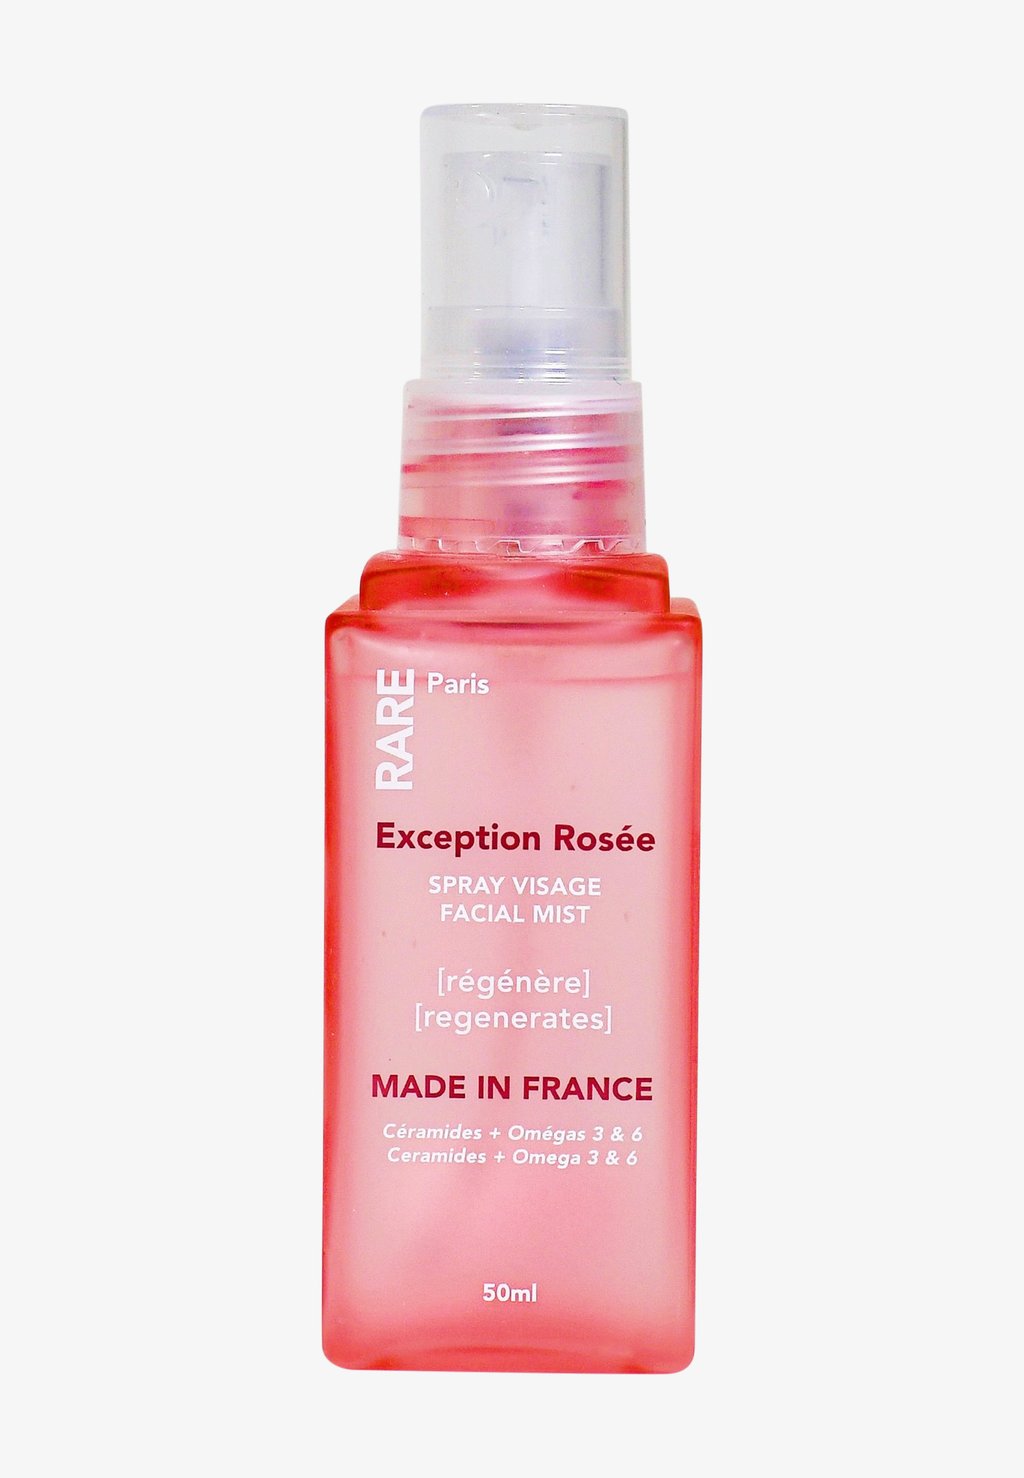 Сыворотка Exception Rosee Facial Mist Rare Paris, розовый